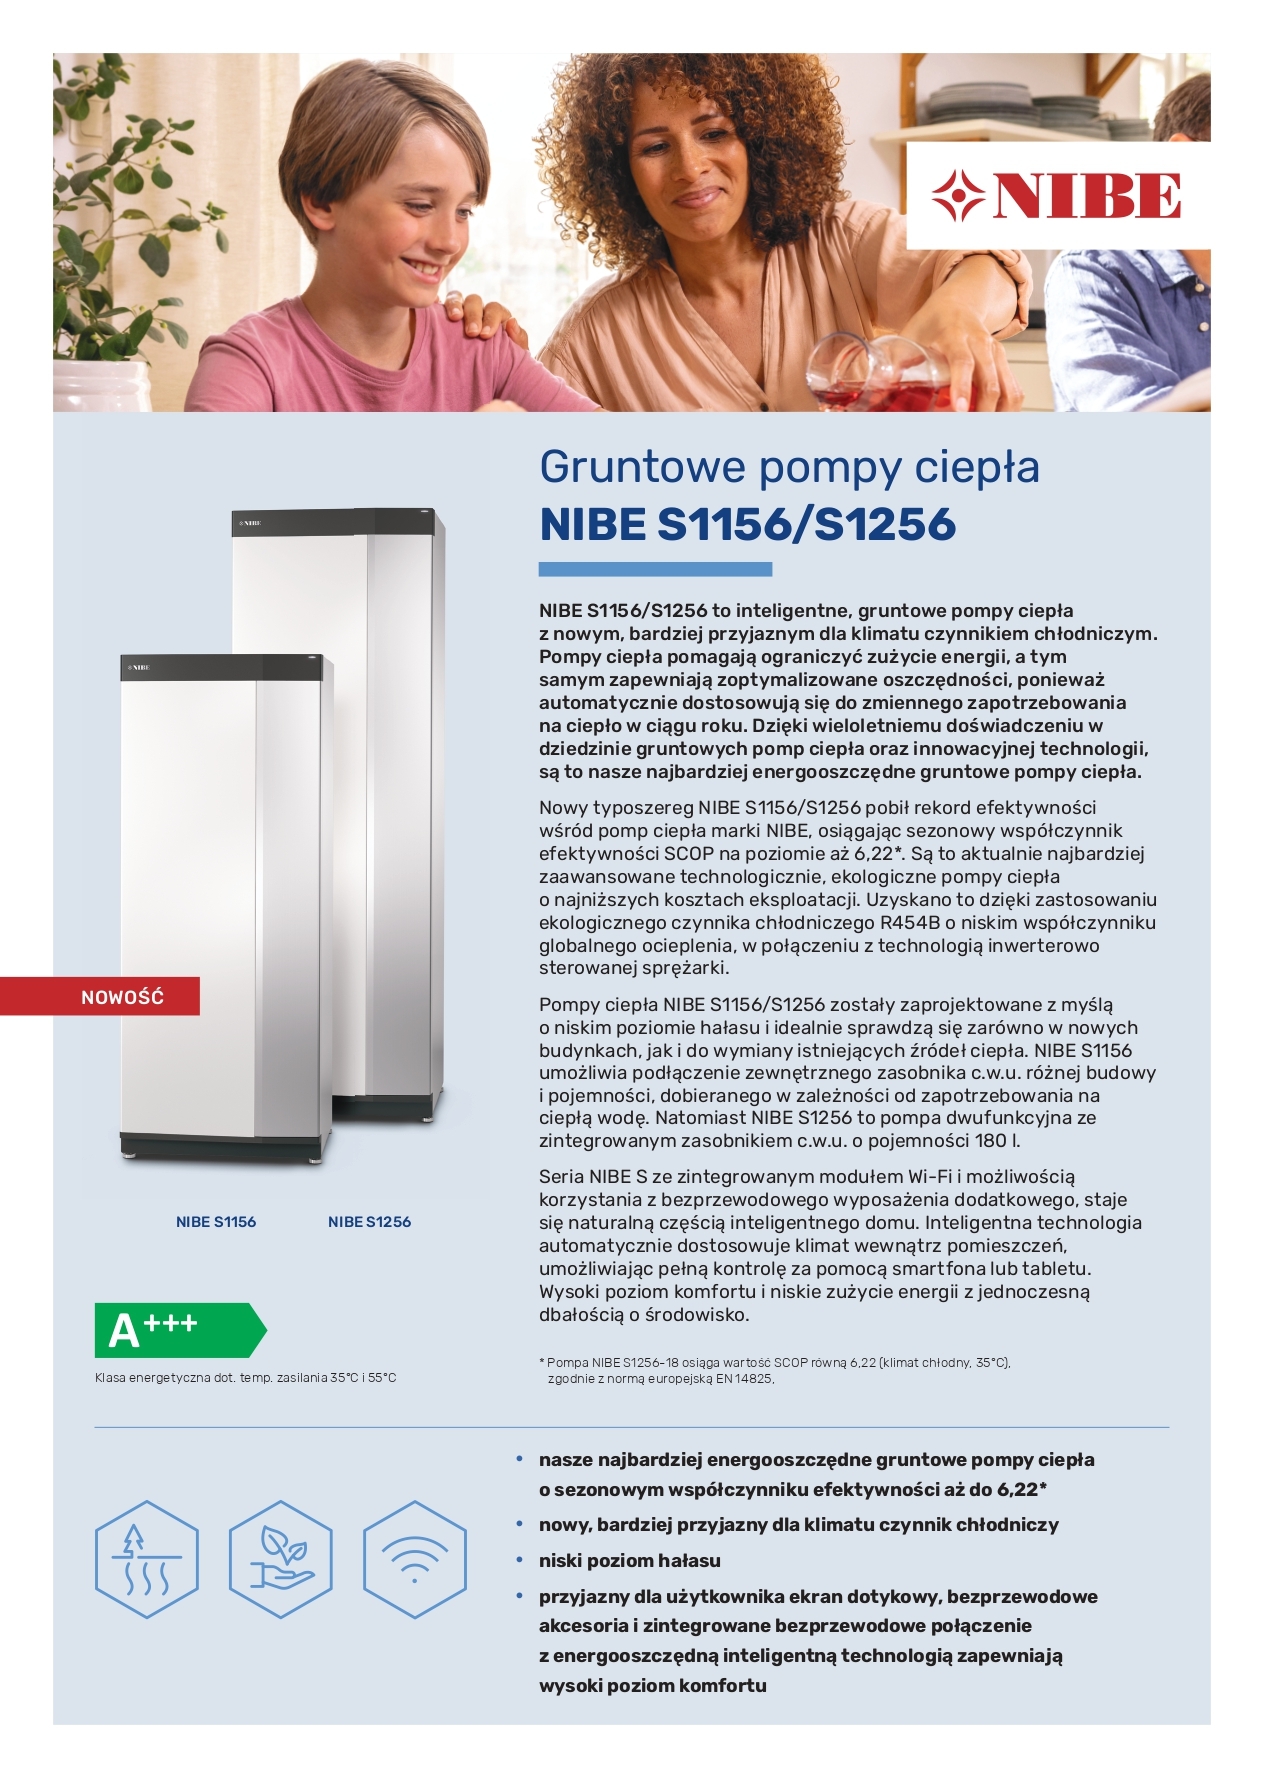 NIBE S1156/S1256